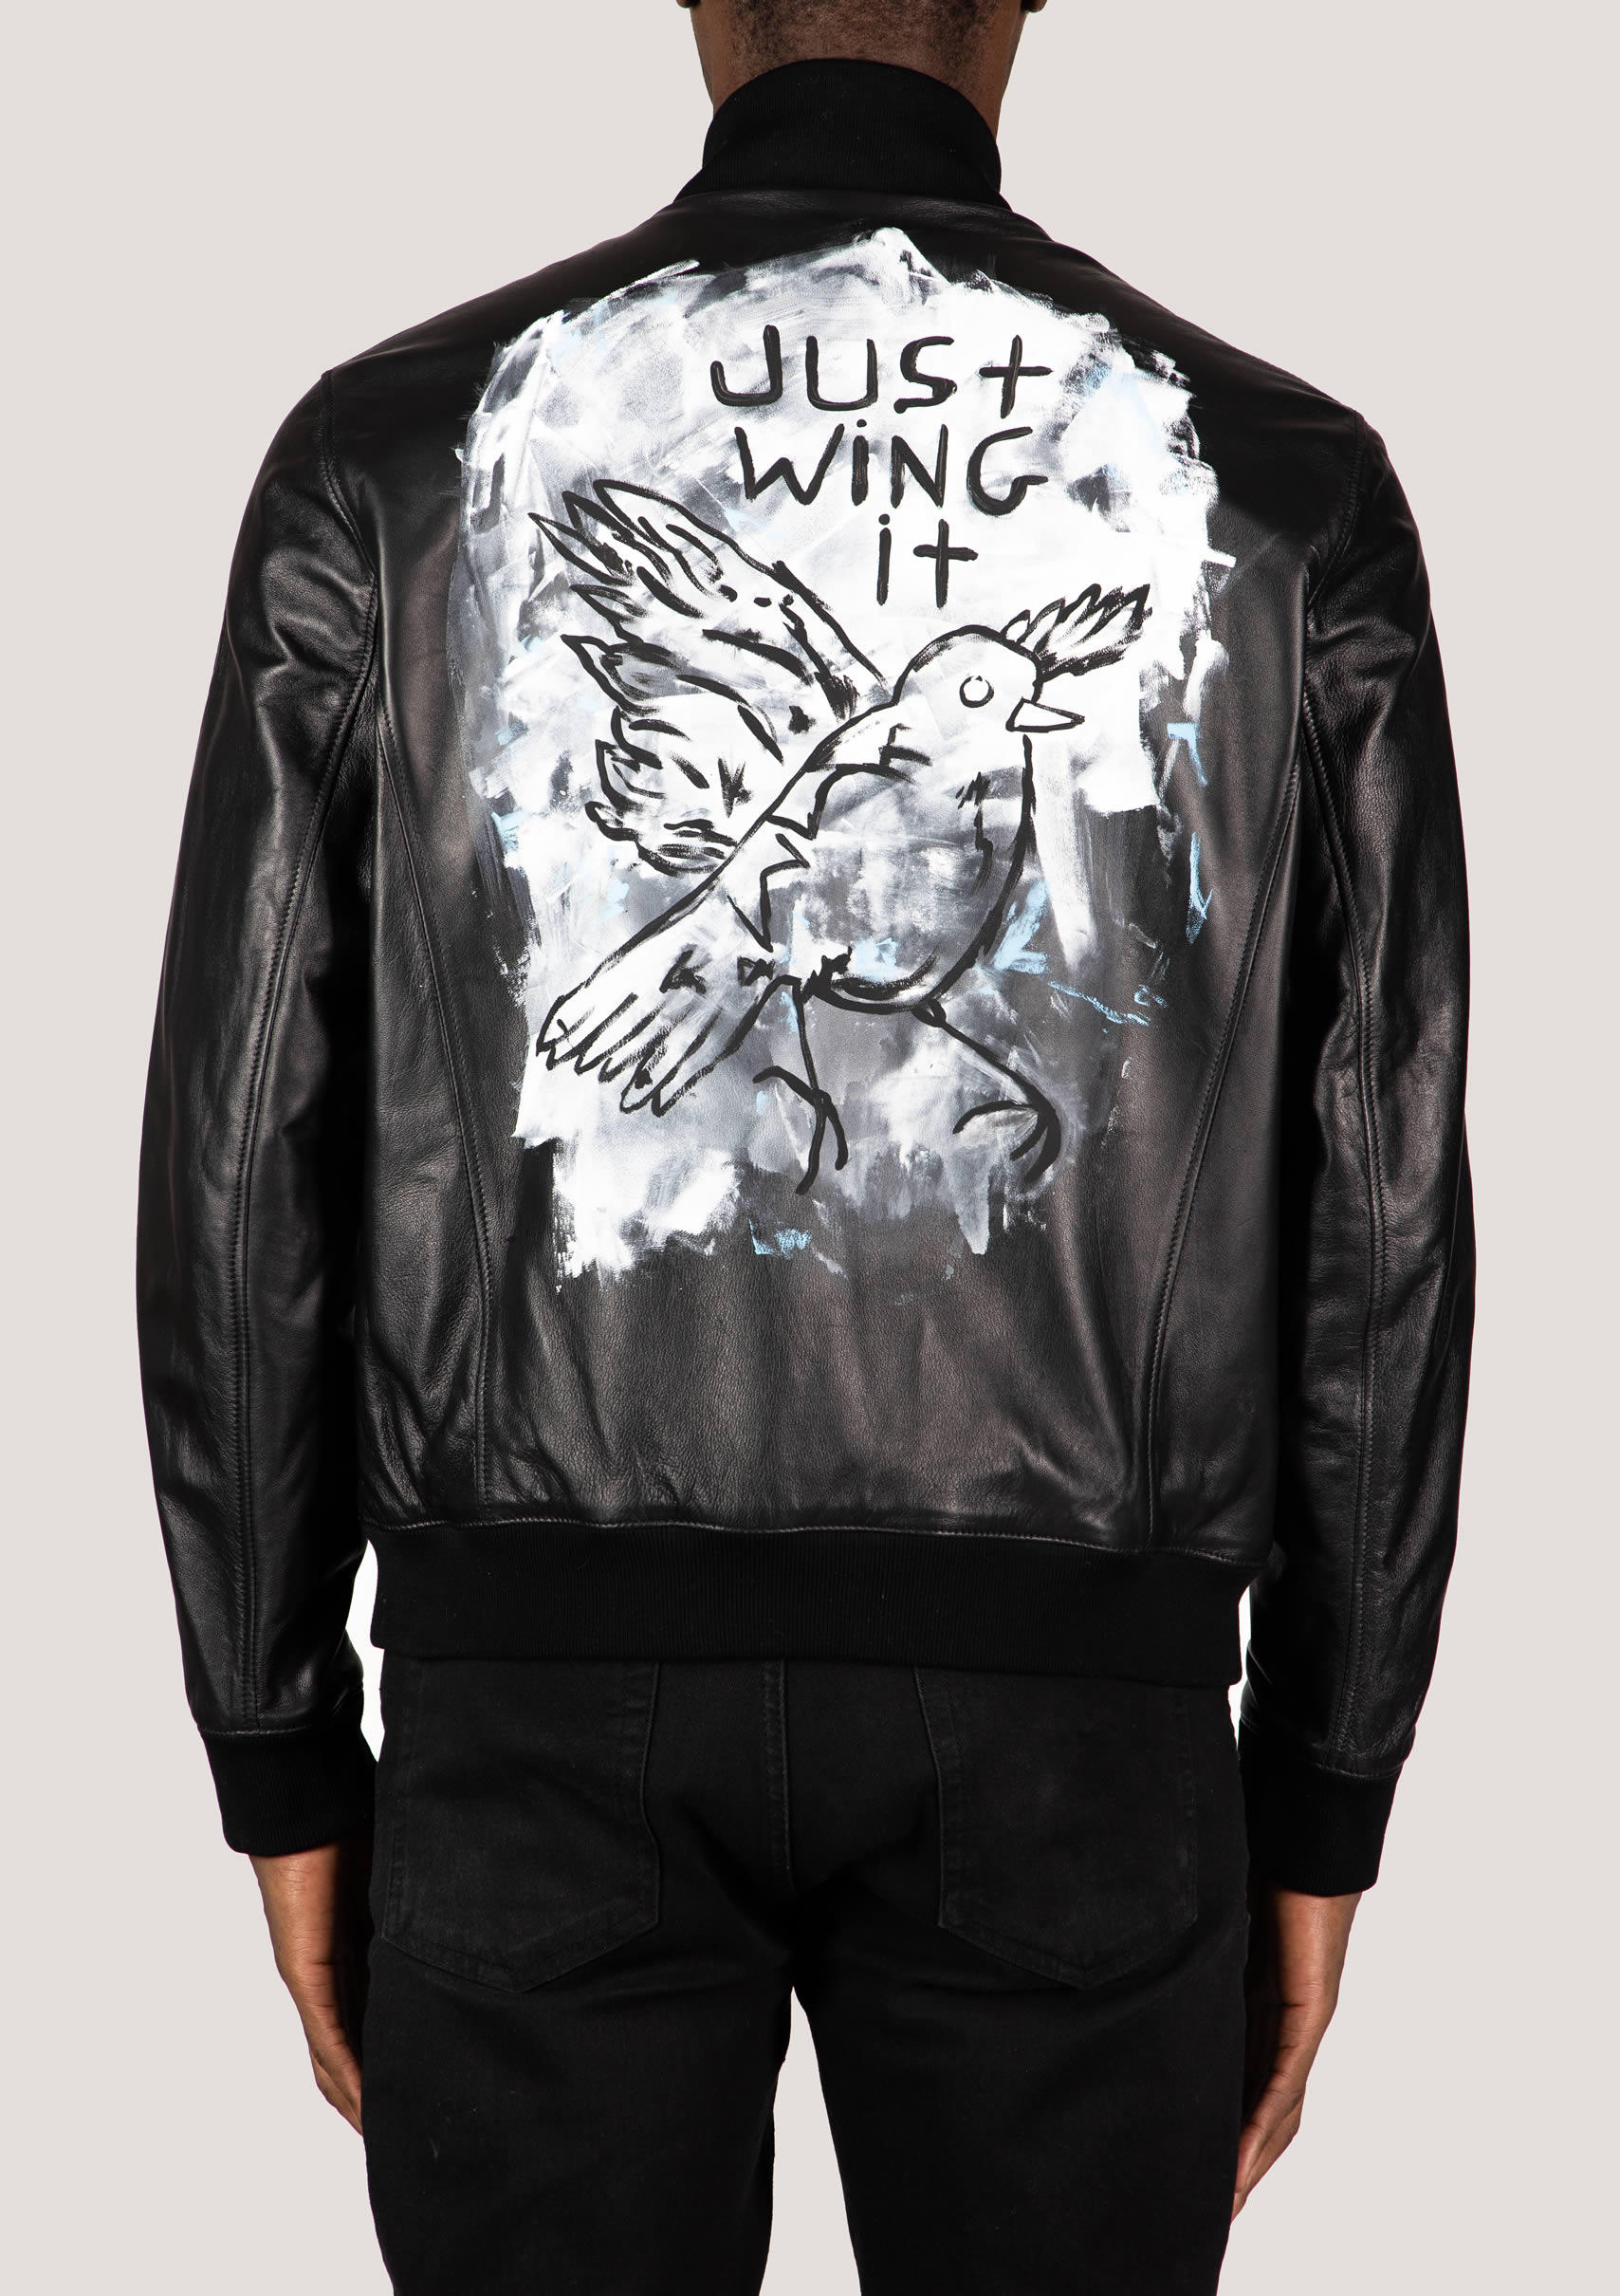 Just Wing It Bomber Jacket - Soriano Fashion & Lifestyle